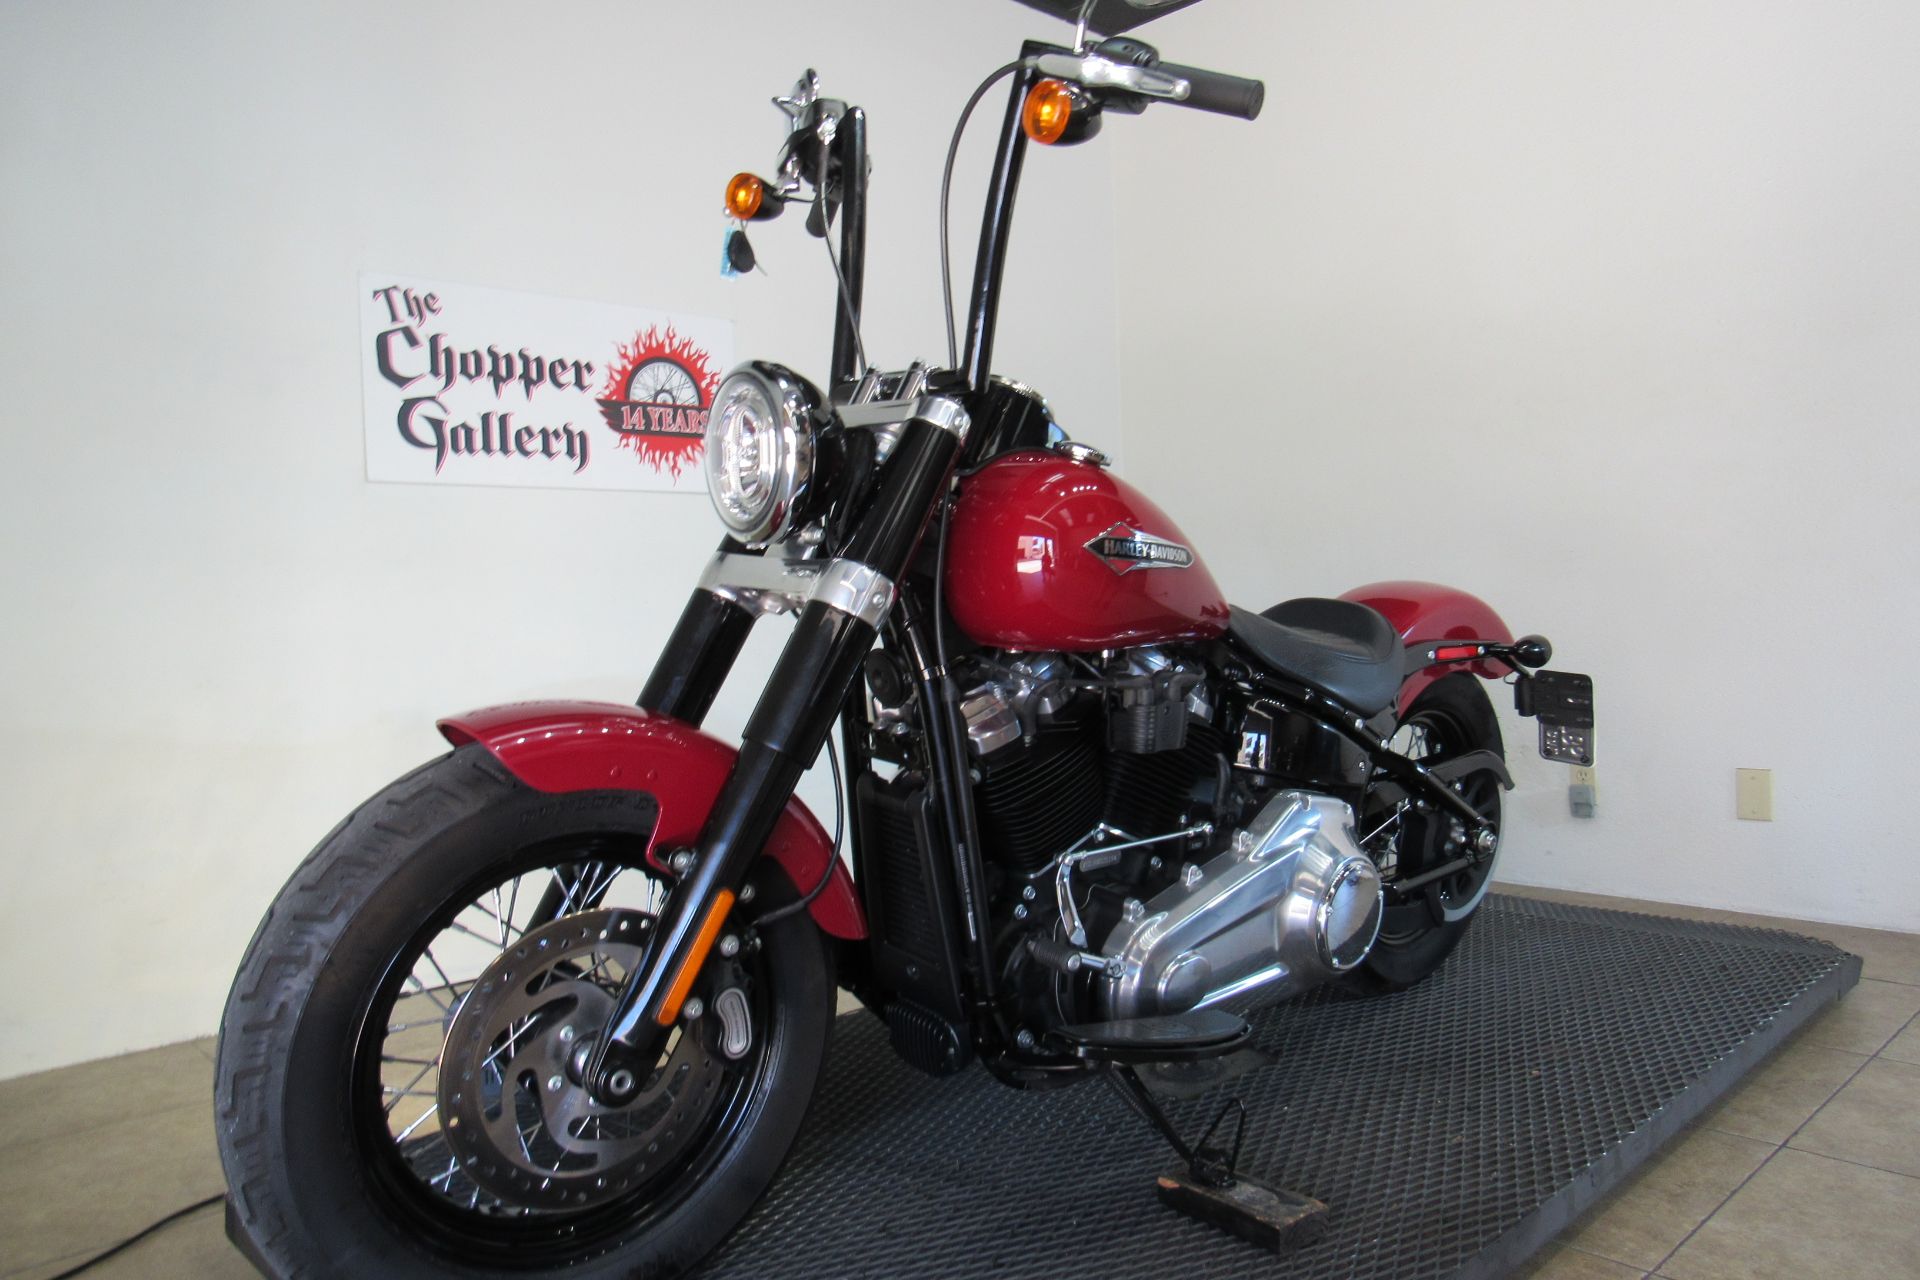 2021 Harley-Davidson Softail Slim® in Temecula, California - Photo 36